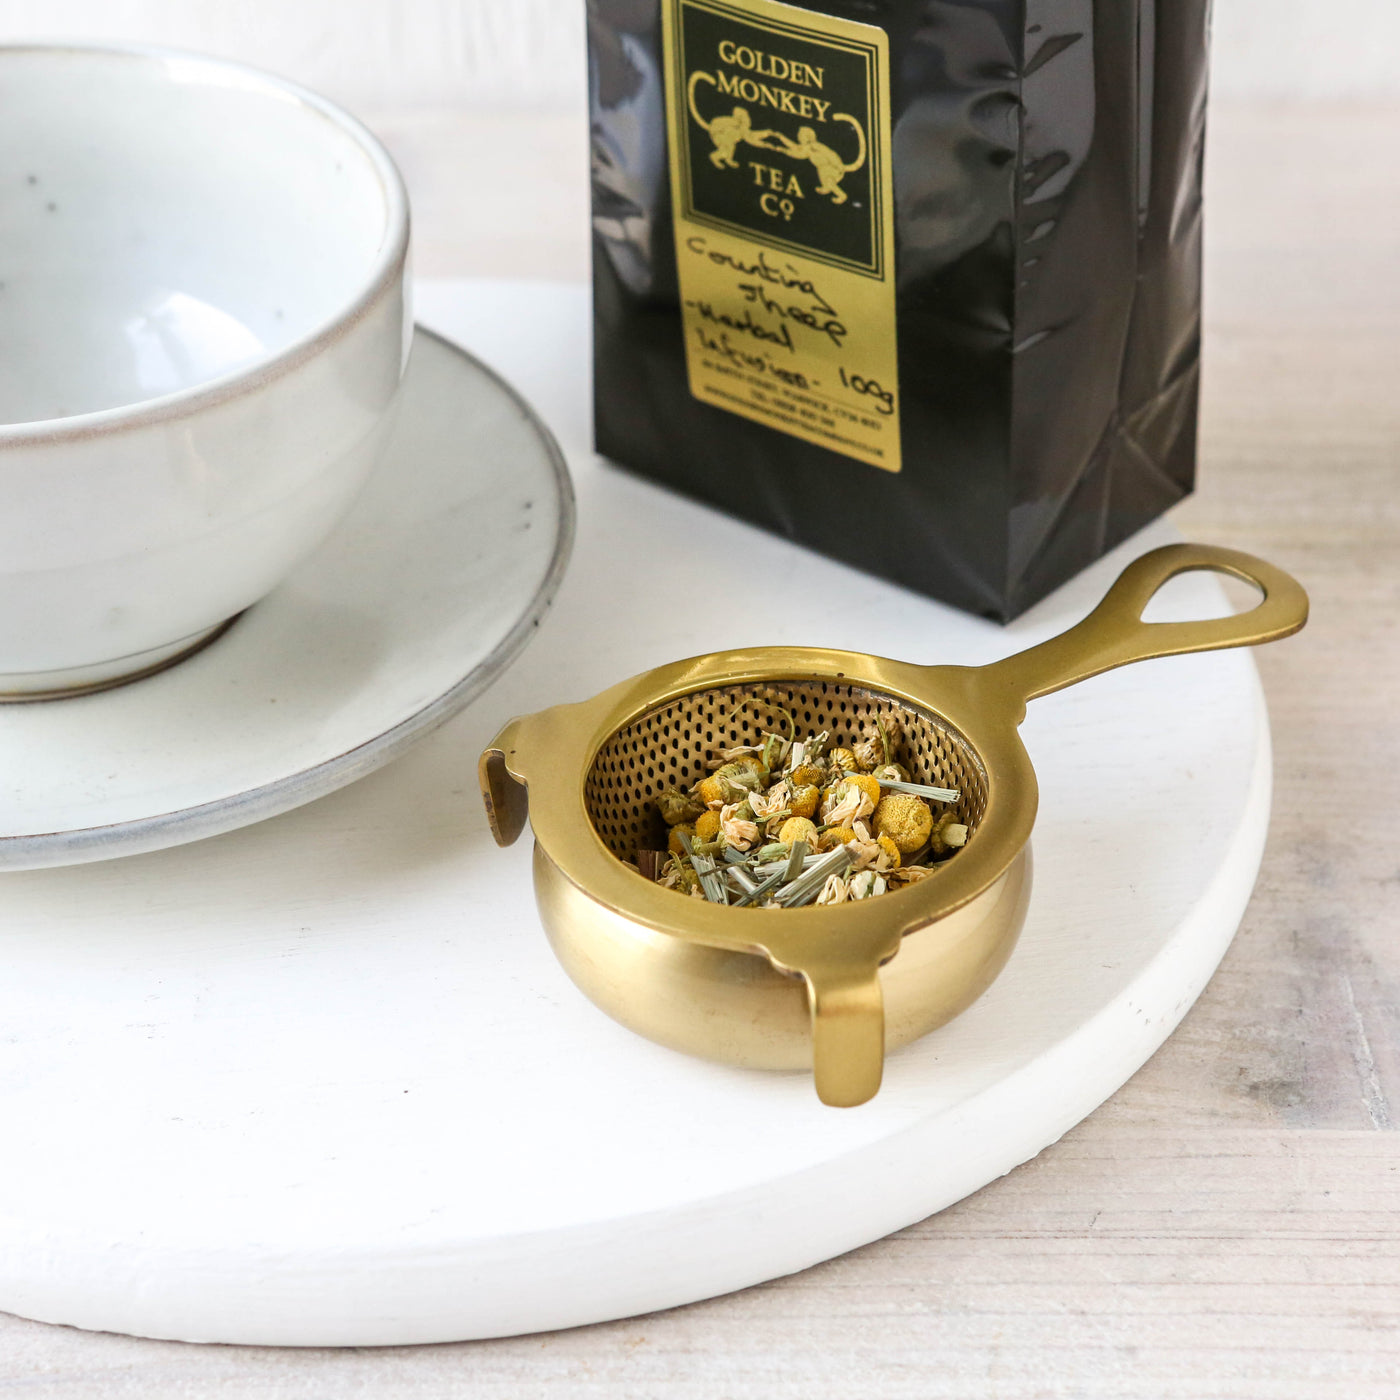 100g Loose Leaf Tea by Golden Monkey Tea Co.